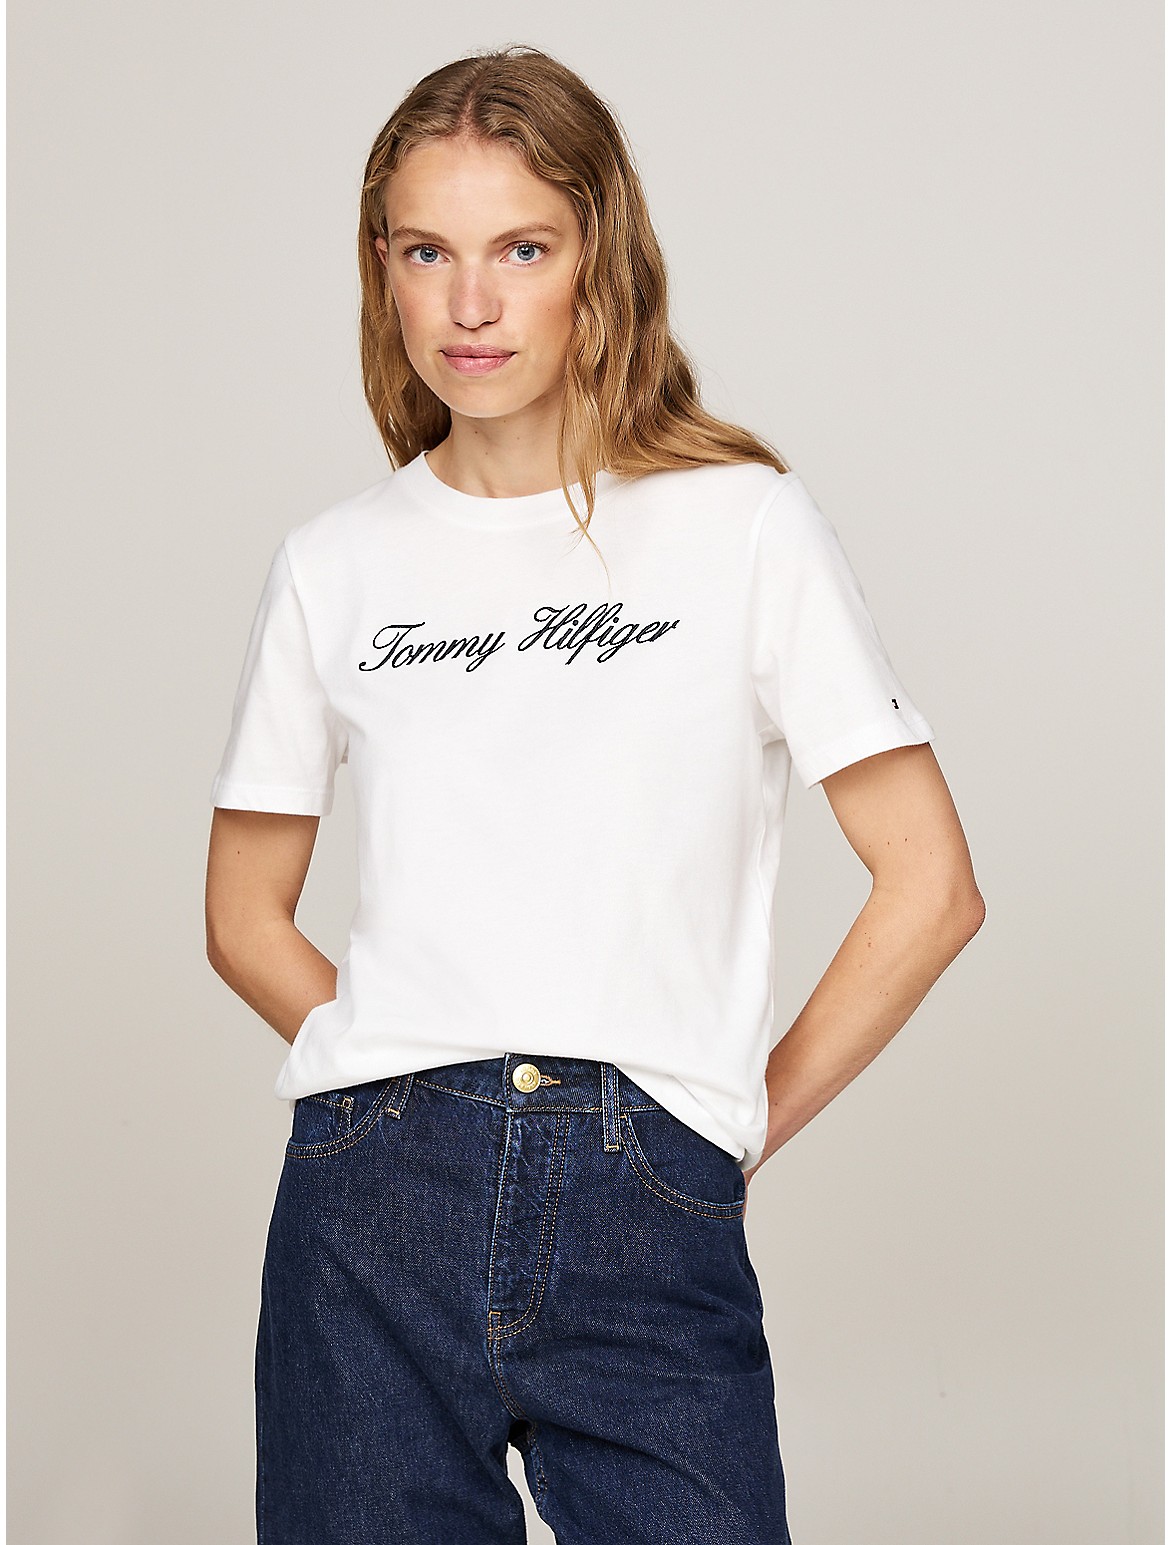 Tommy Hilfiger Women's Embroidered Script Logo T-Shirt